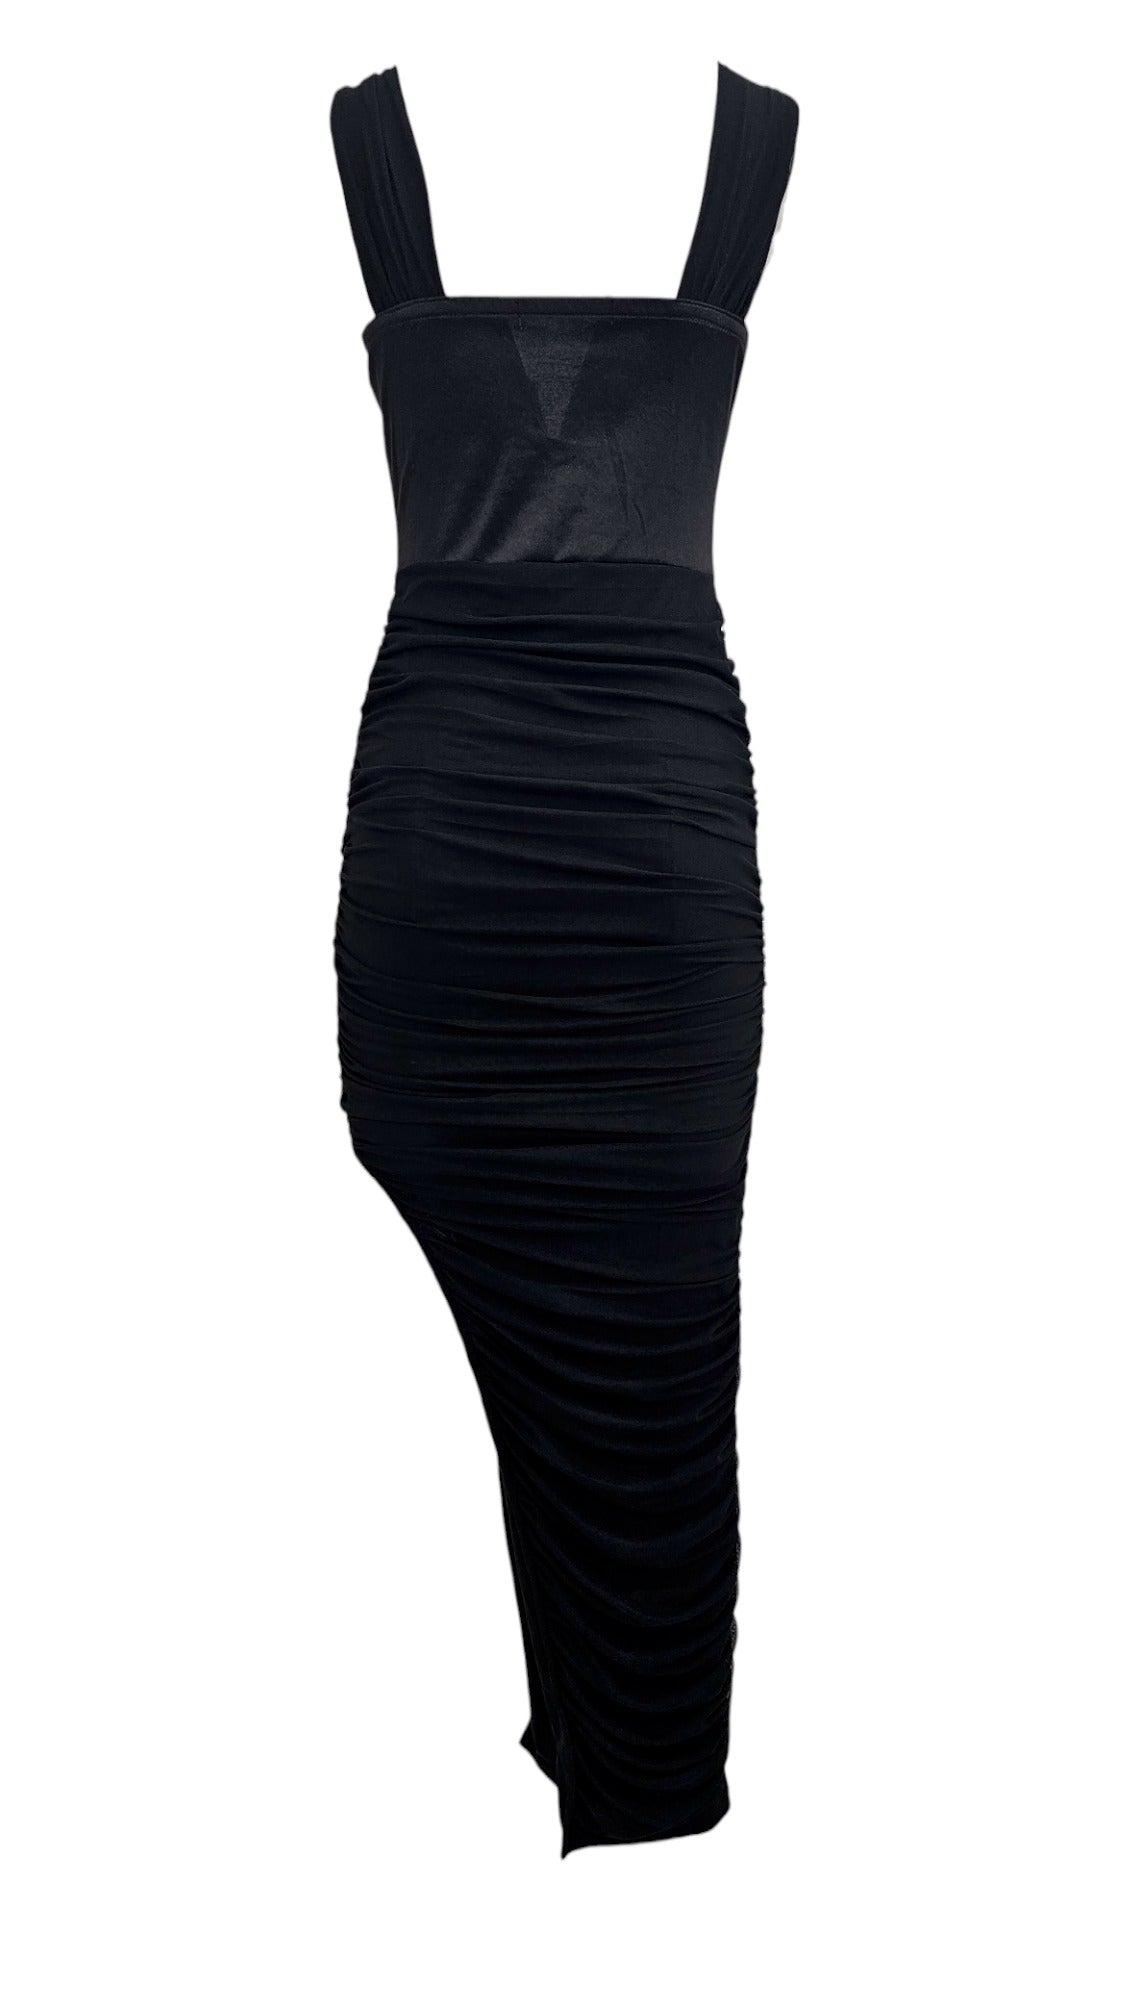 Elegant long black dress